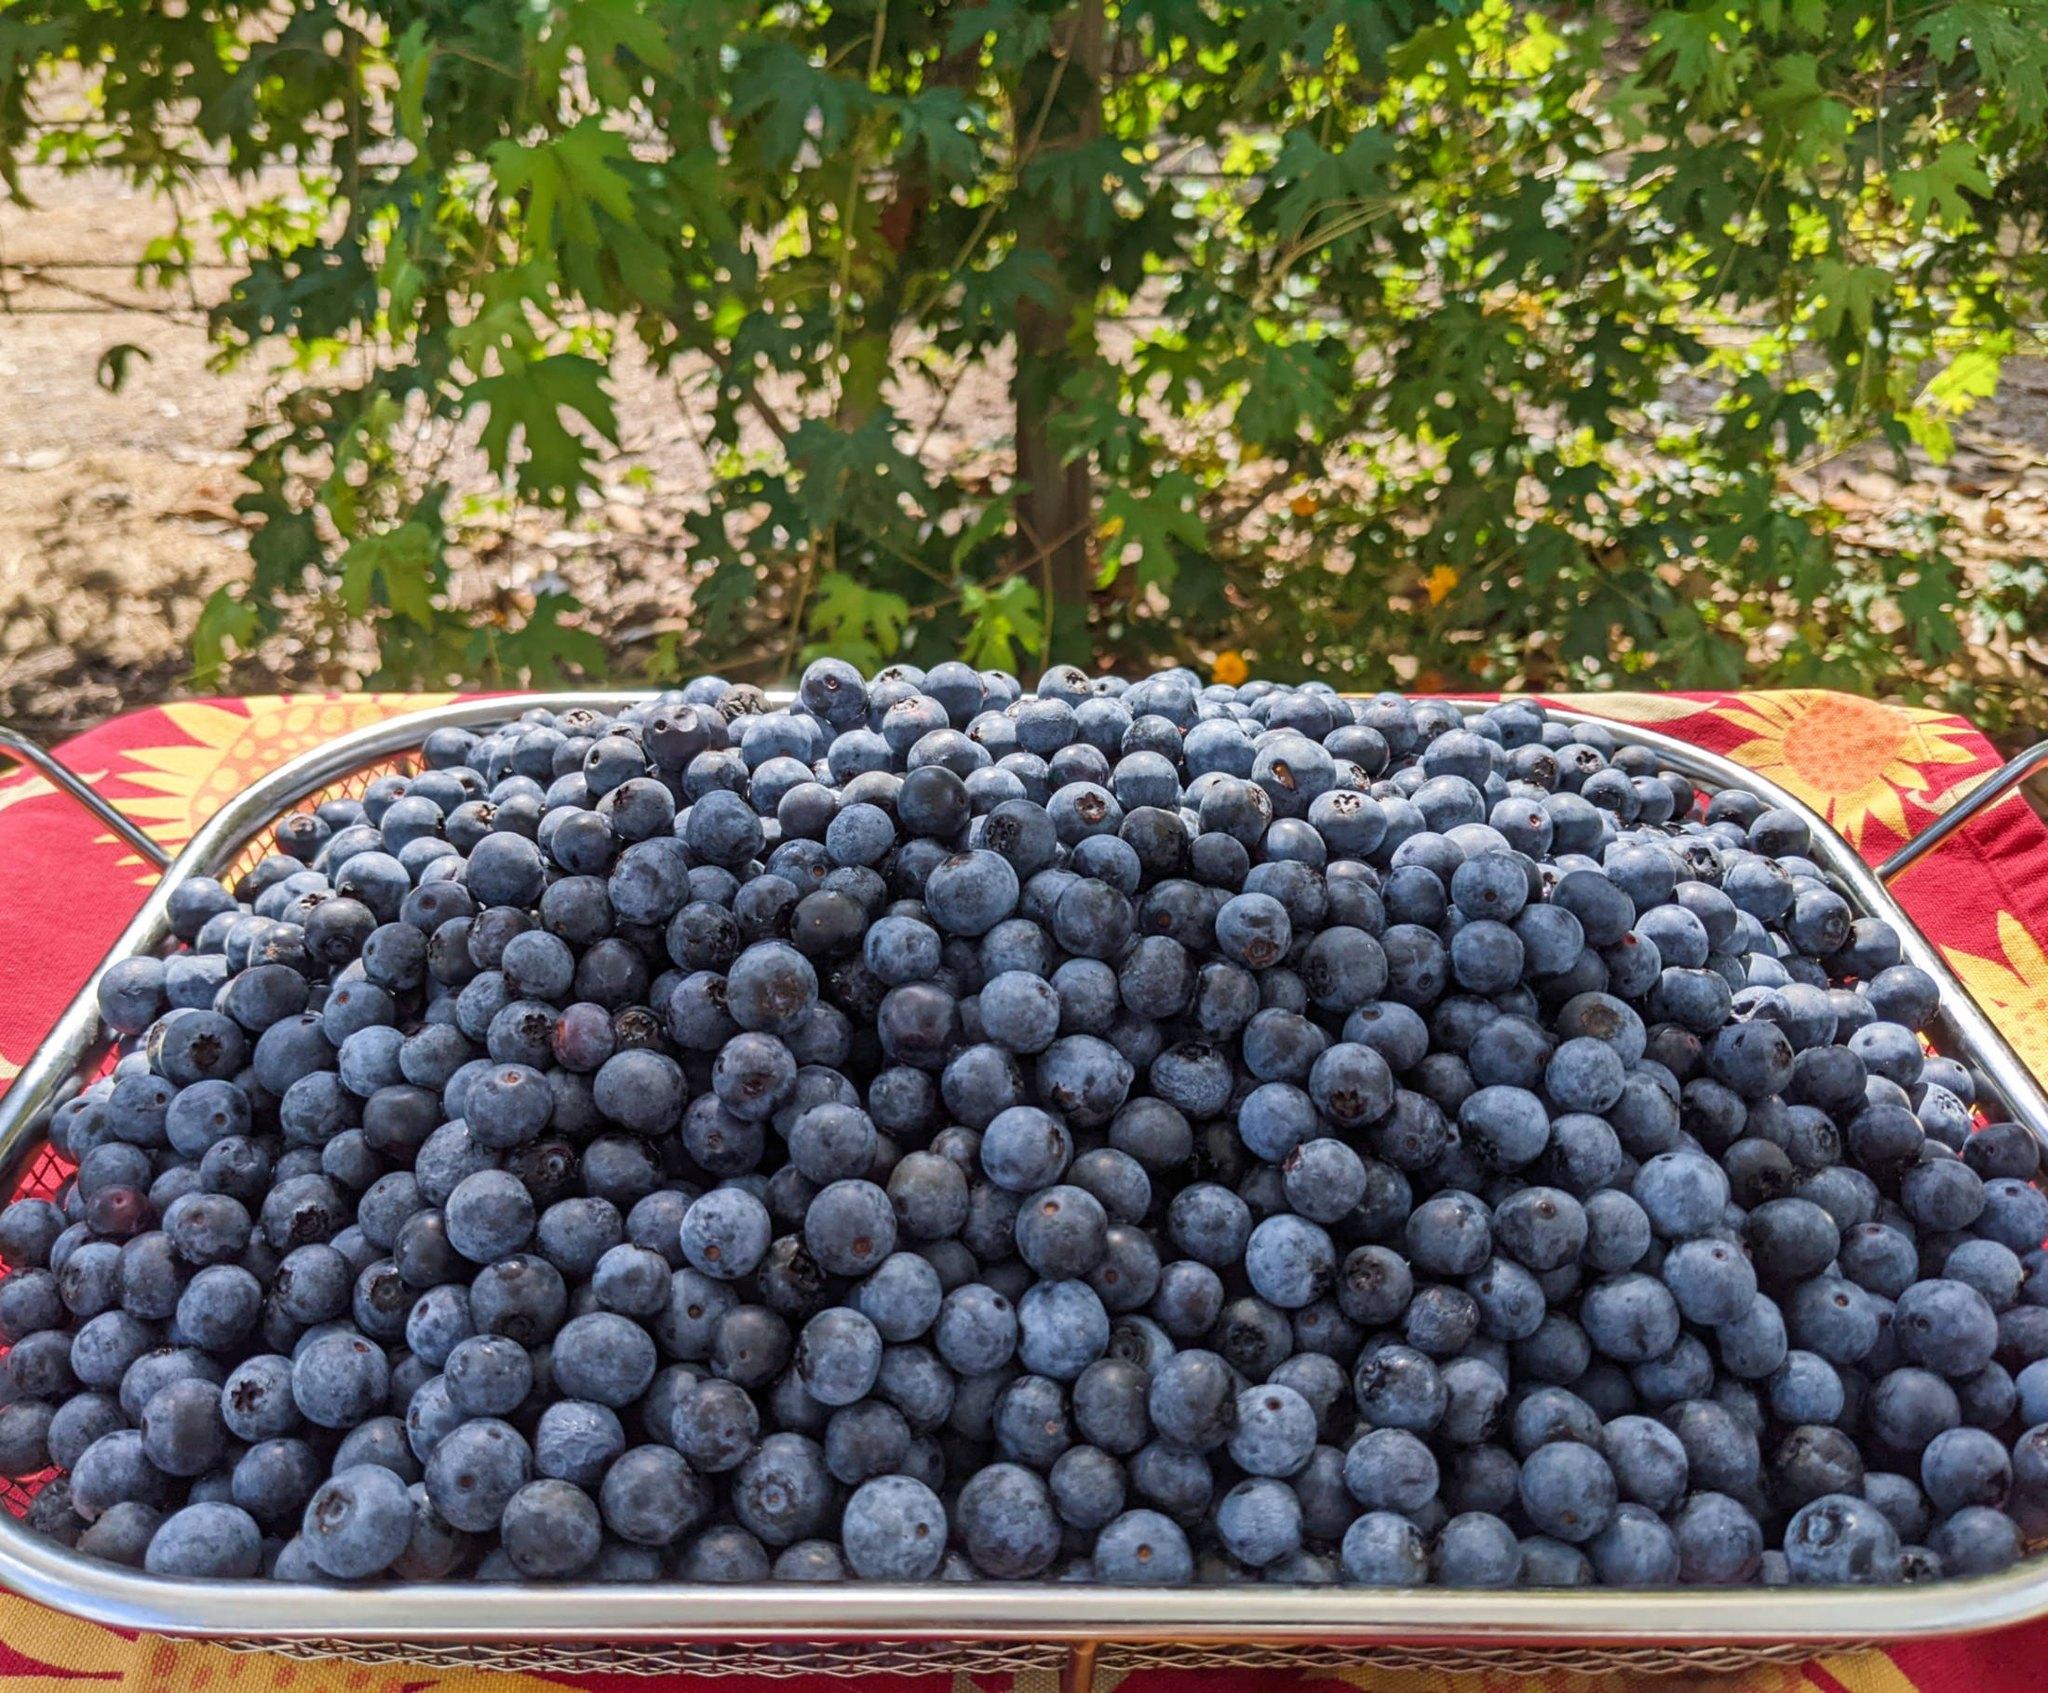 U-Pick Blueberry Farms in Florida